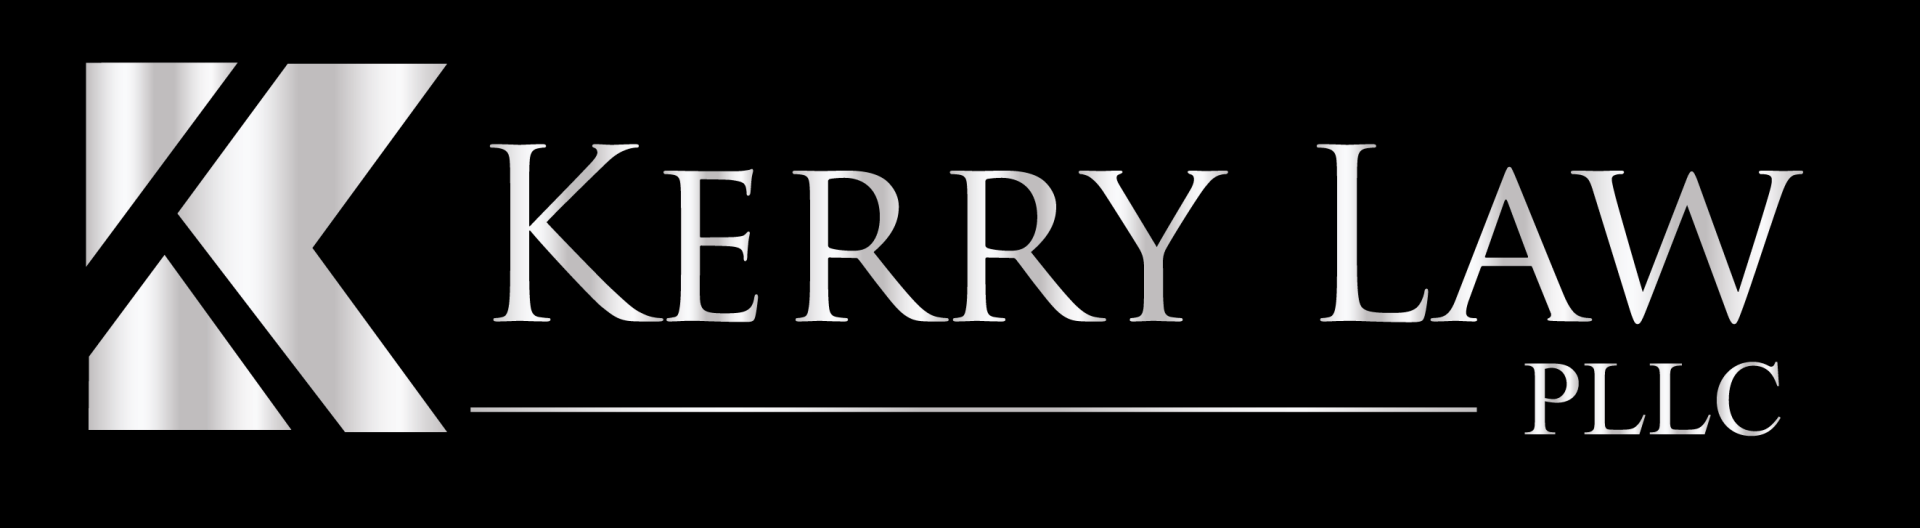 kerry-law-pllc-logo